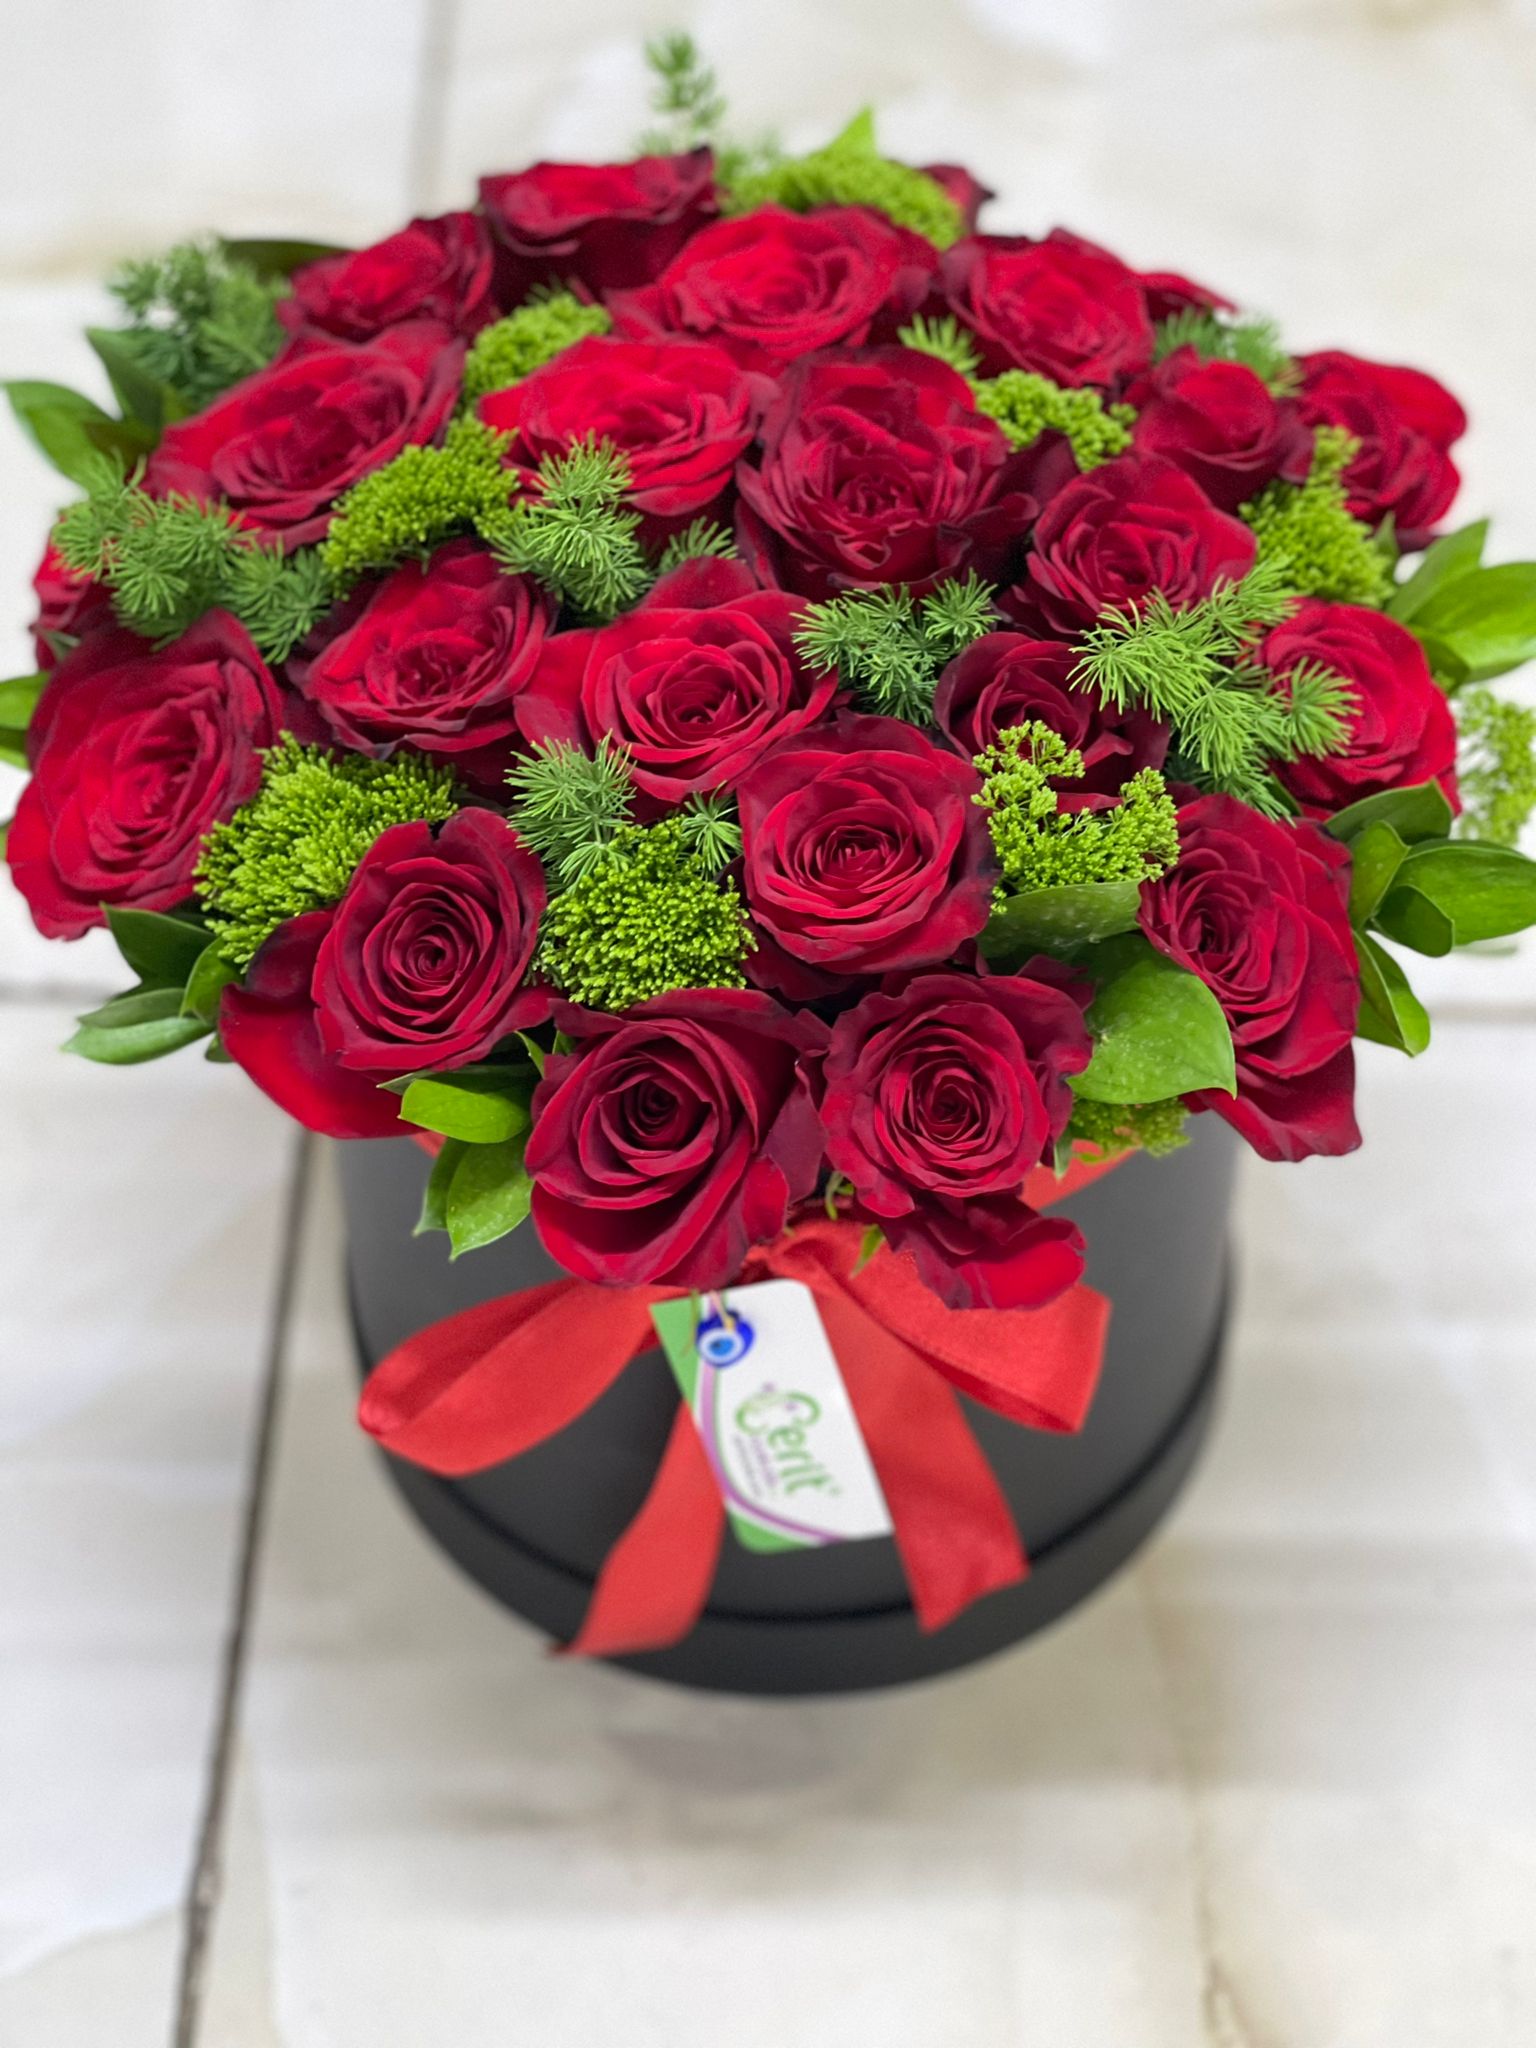  Belek Blumen 29 Red Roses in a Black Box